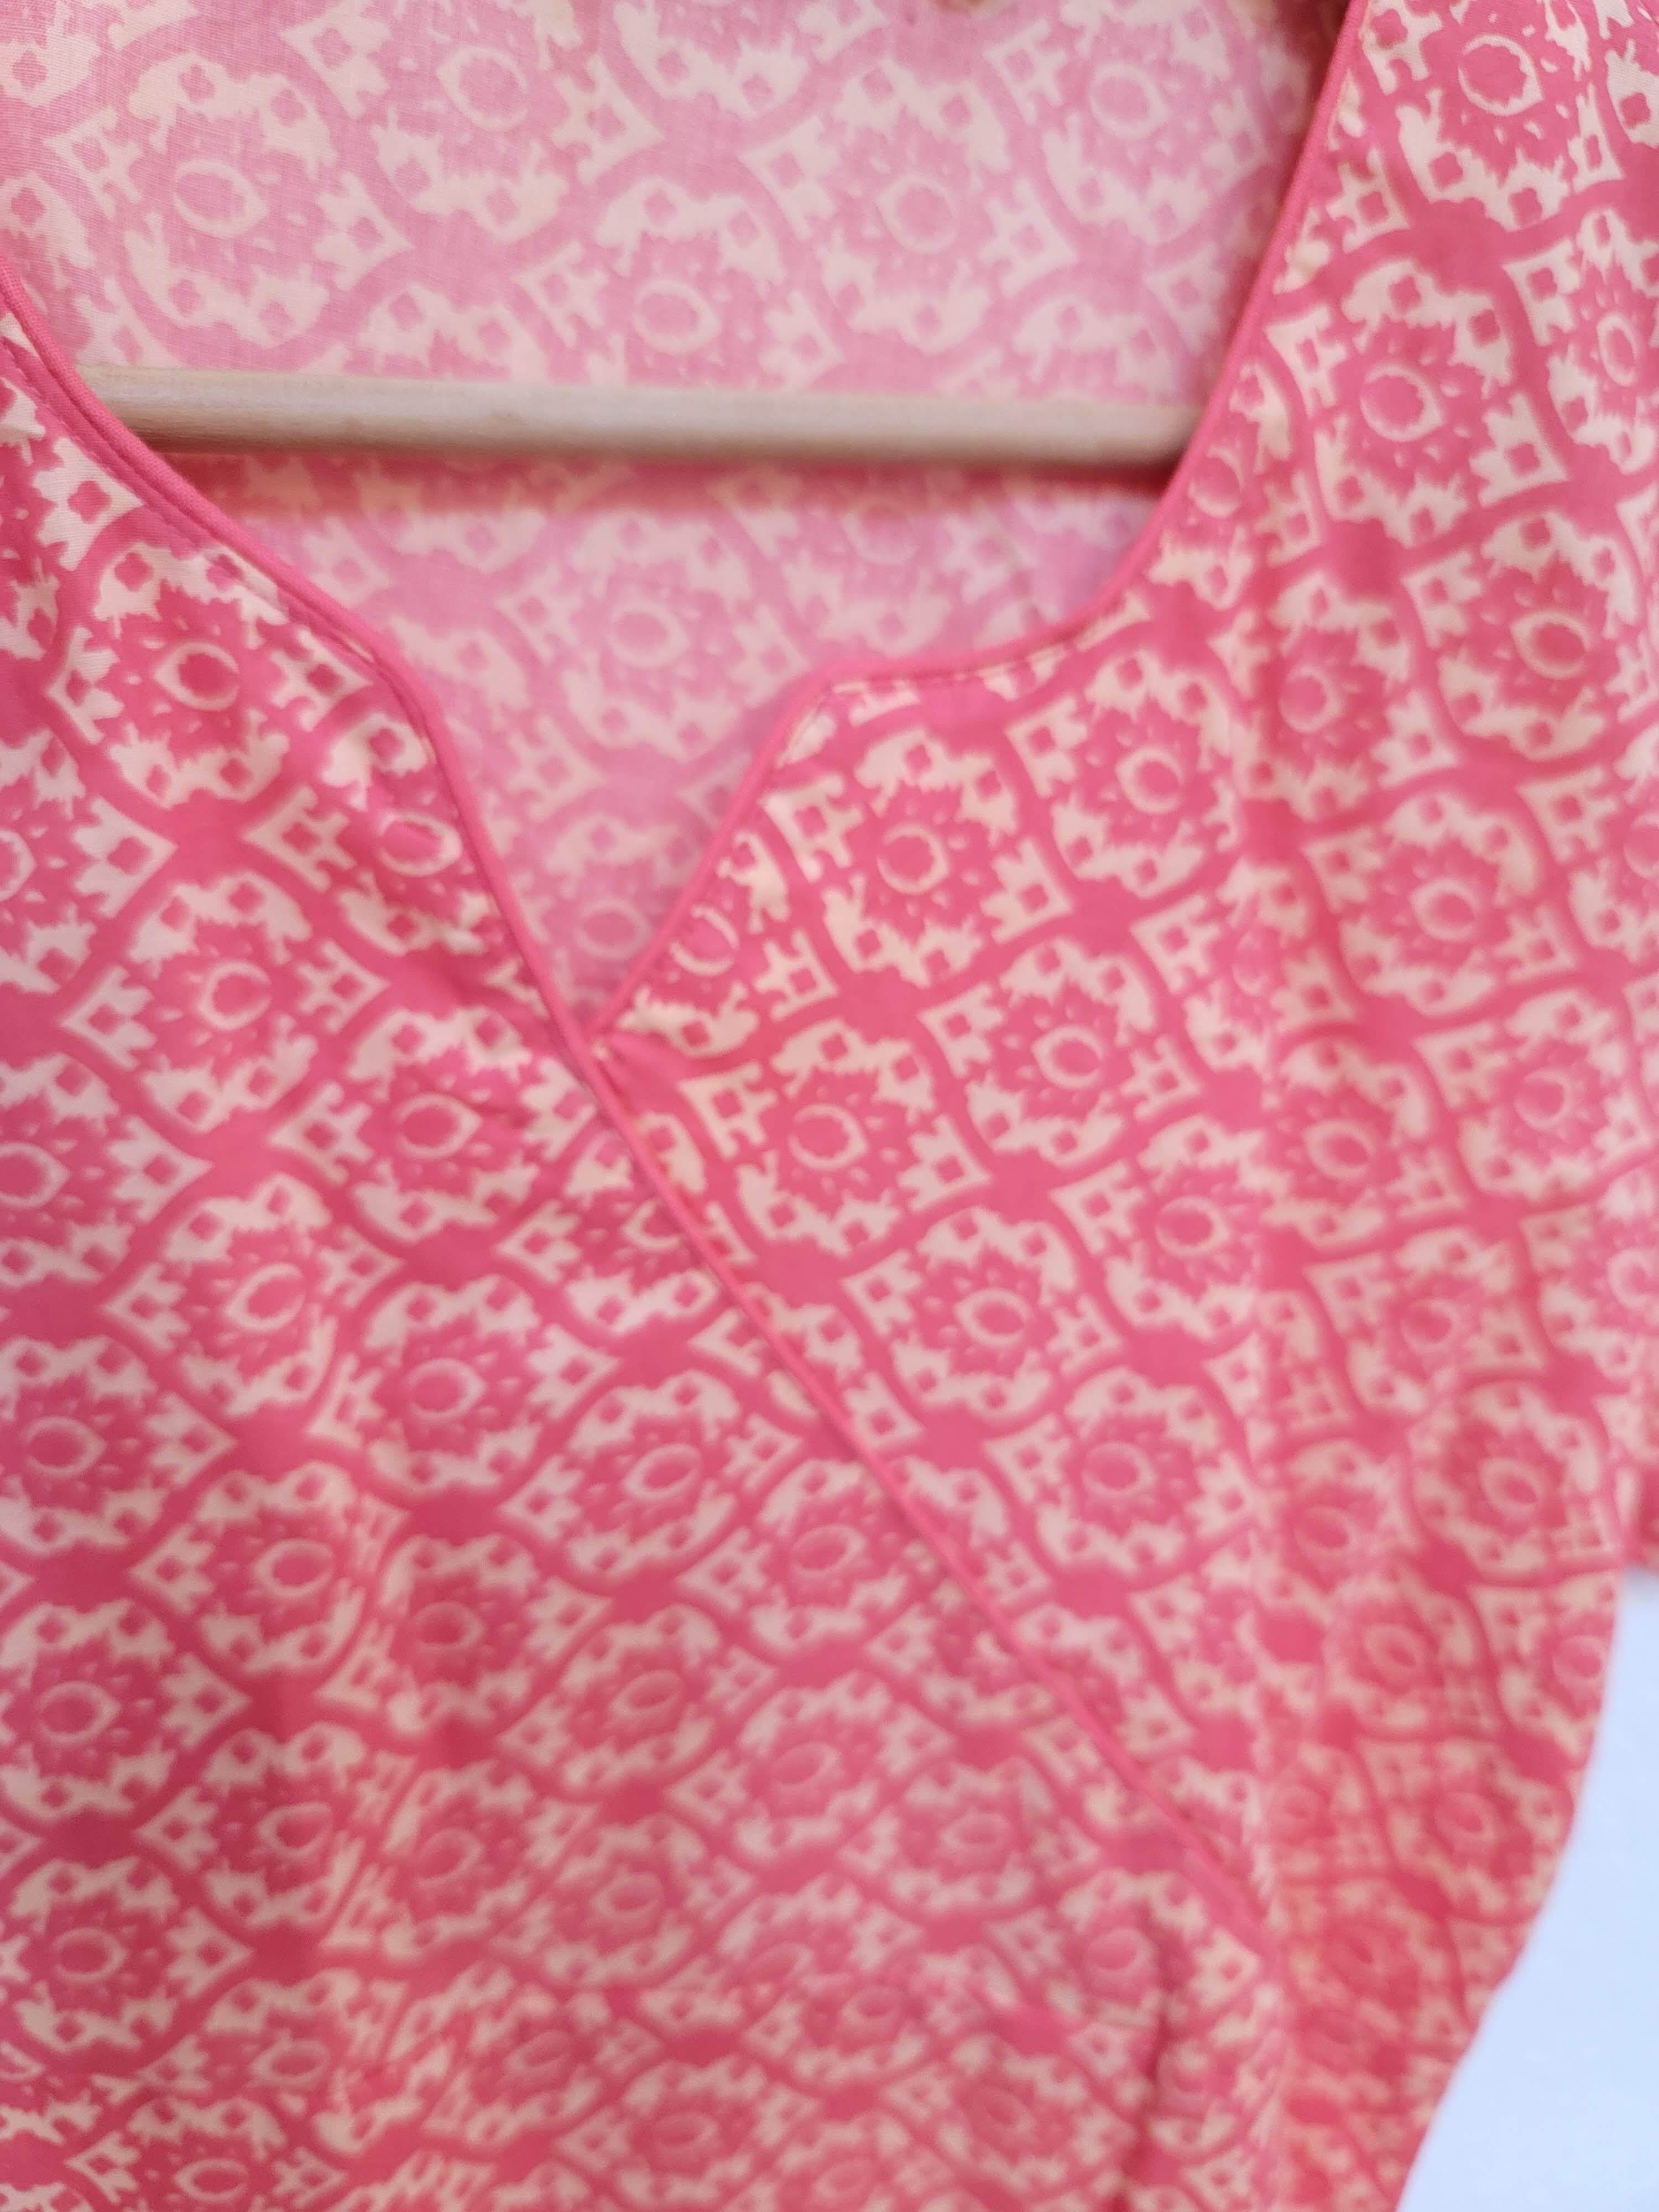 COTLAND Fashions Jaipuri Cotton Printed Short Kurti for Women (Floral Pink)  : Amazon.in: Fashion